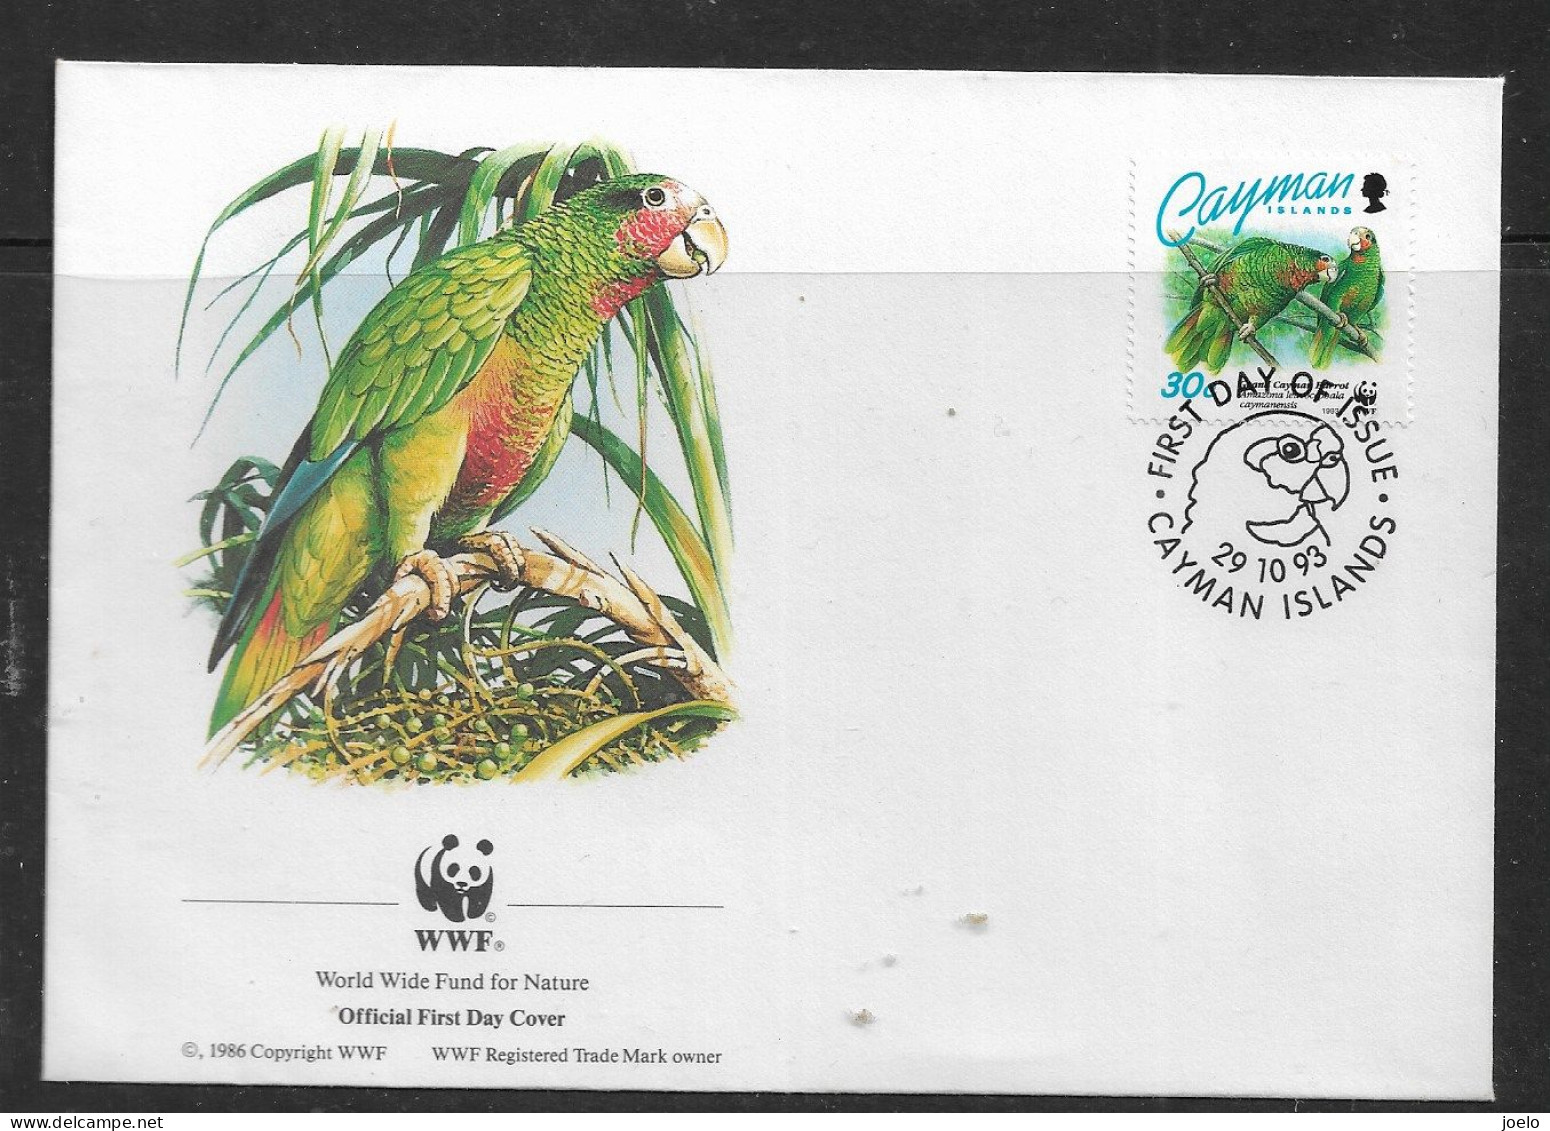 CAYMAN ISLAND 1993 PARROTS WWF FDC - Iles Caïmans